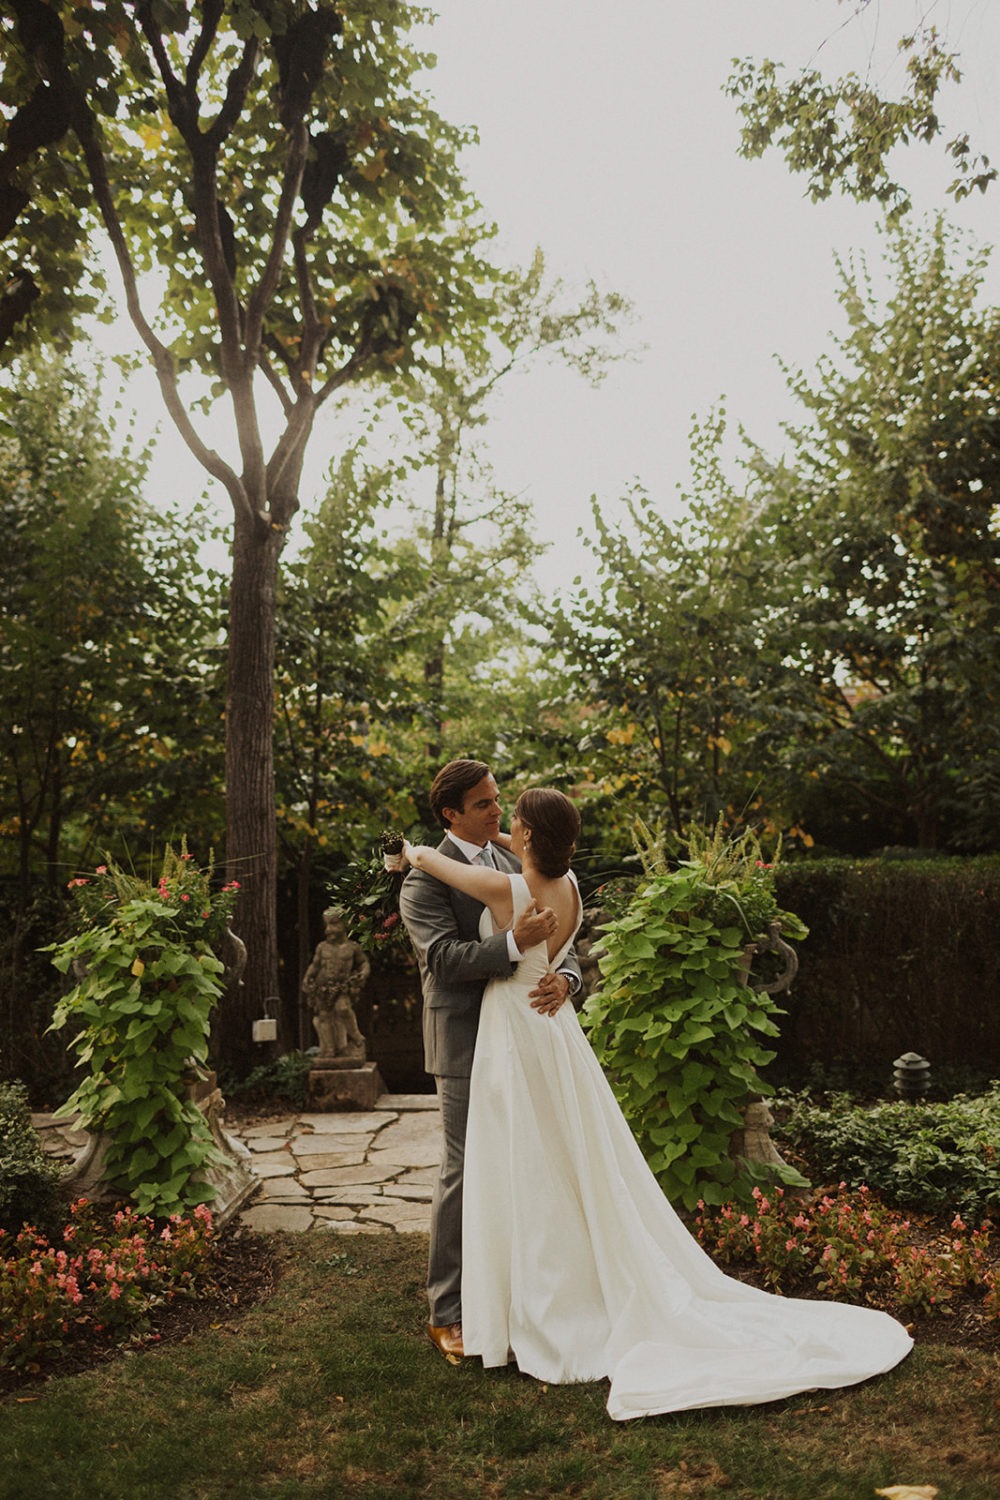 Couple embraces in garden of Meridian House DC wedding venue